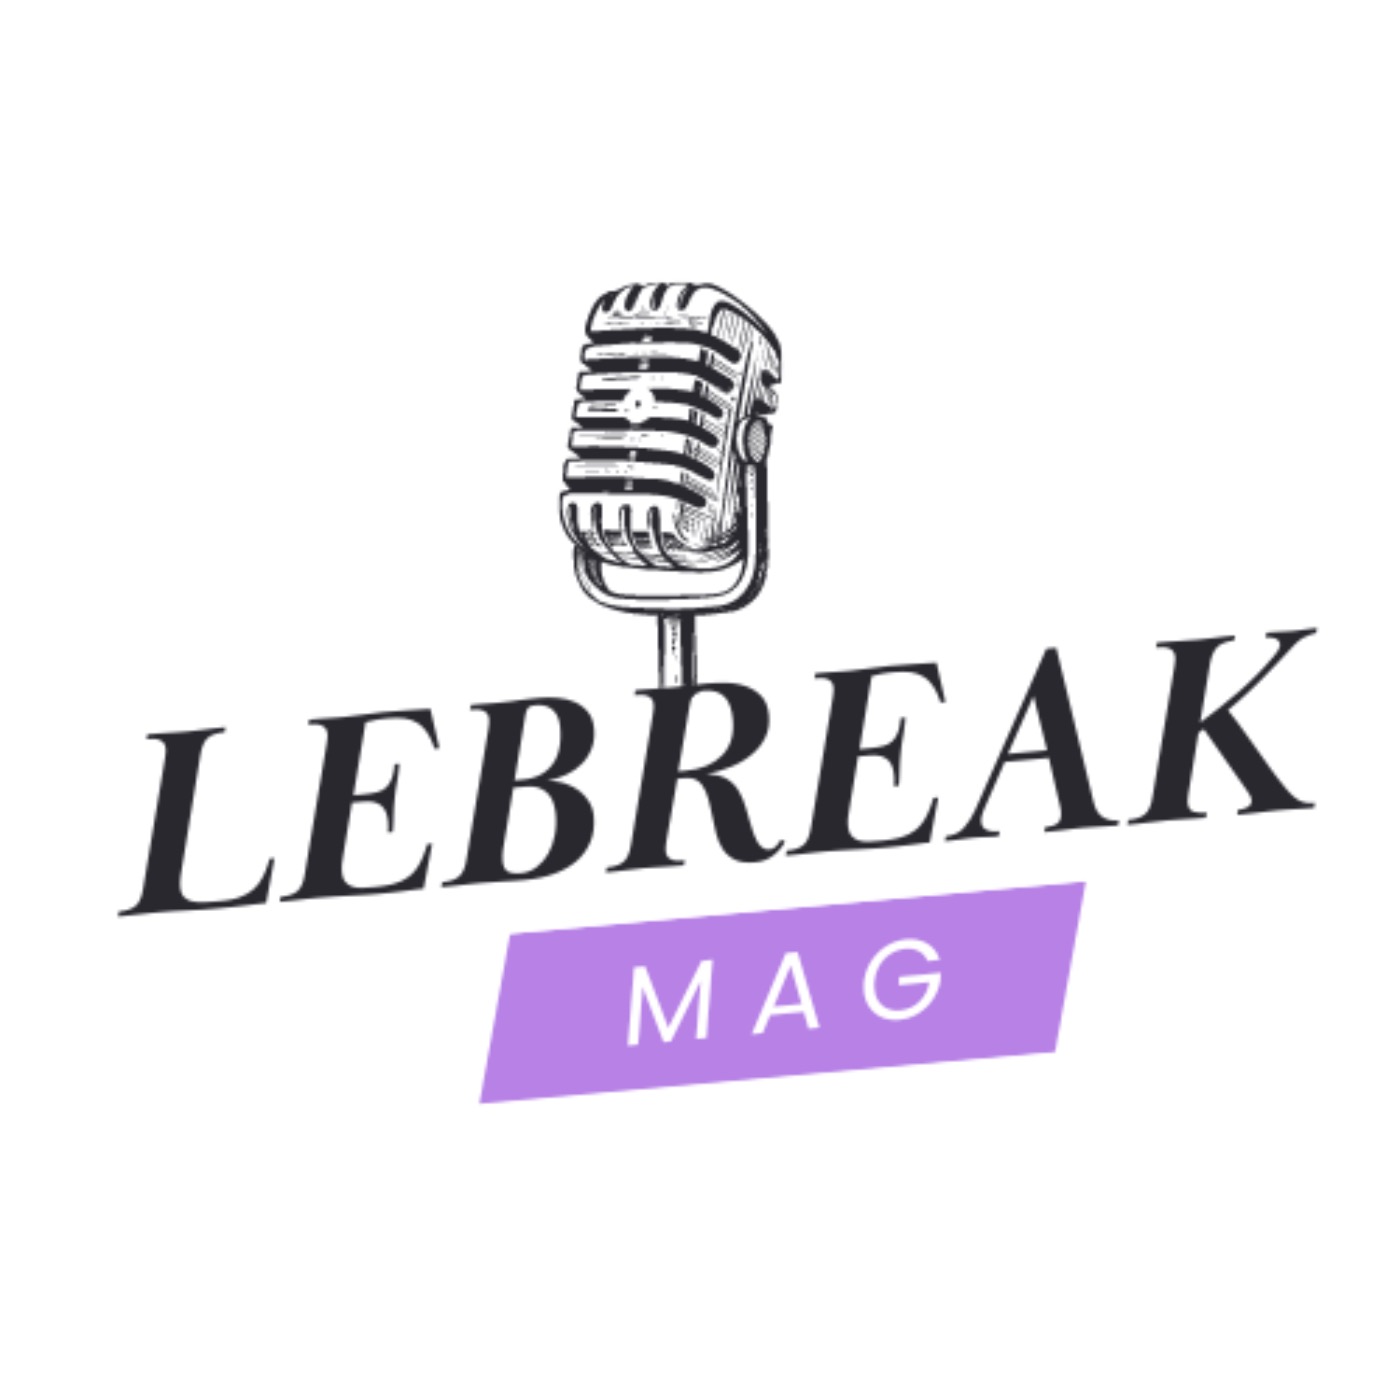 LeBreak Mag - Le Podcast